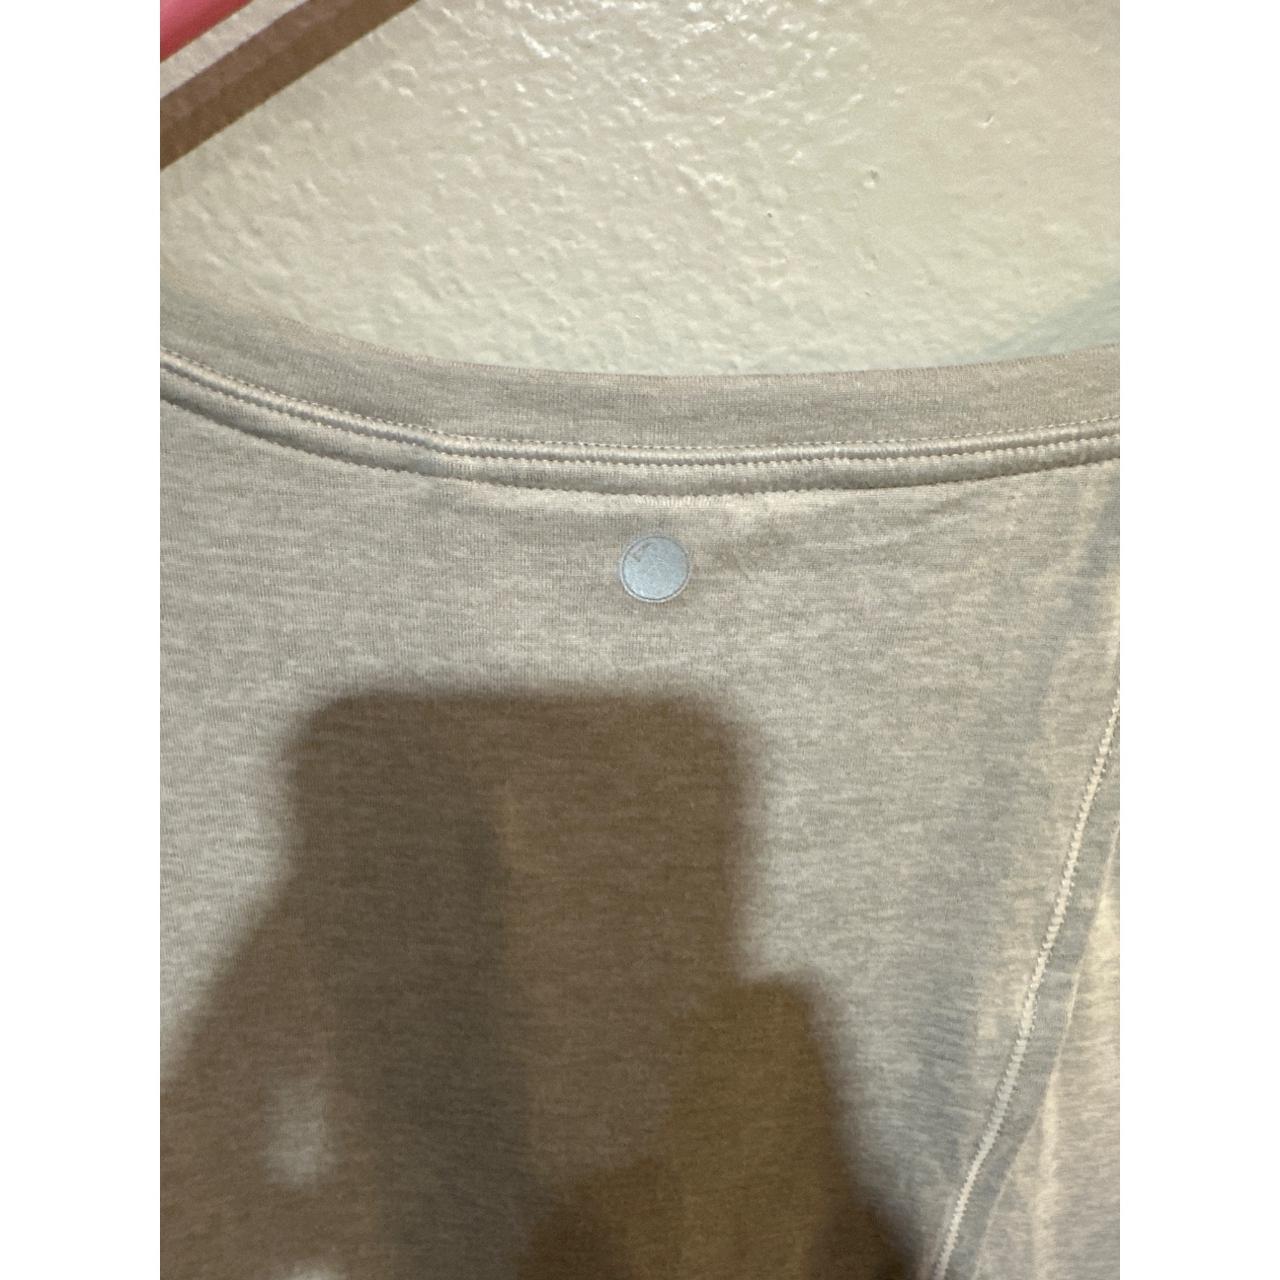 Yogalicious S Criss Cross Open Back Long Sleeve Shirt with thumbholes